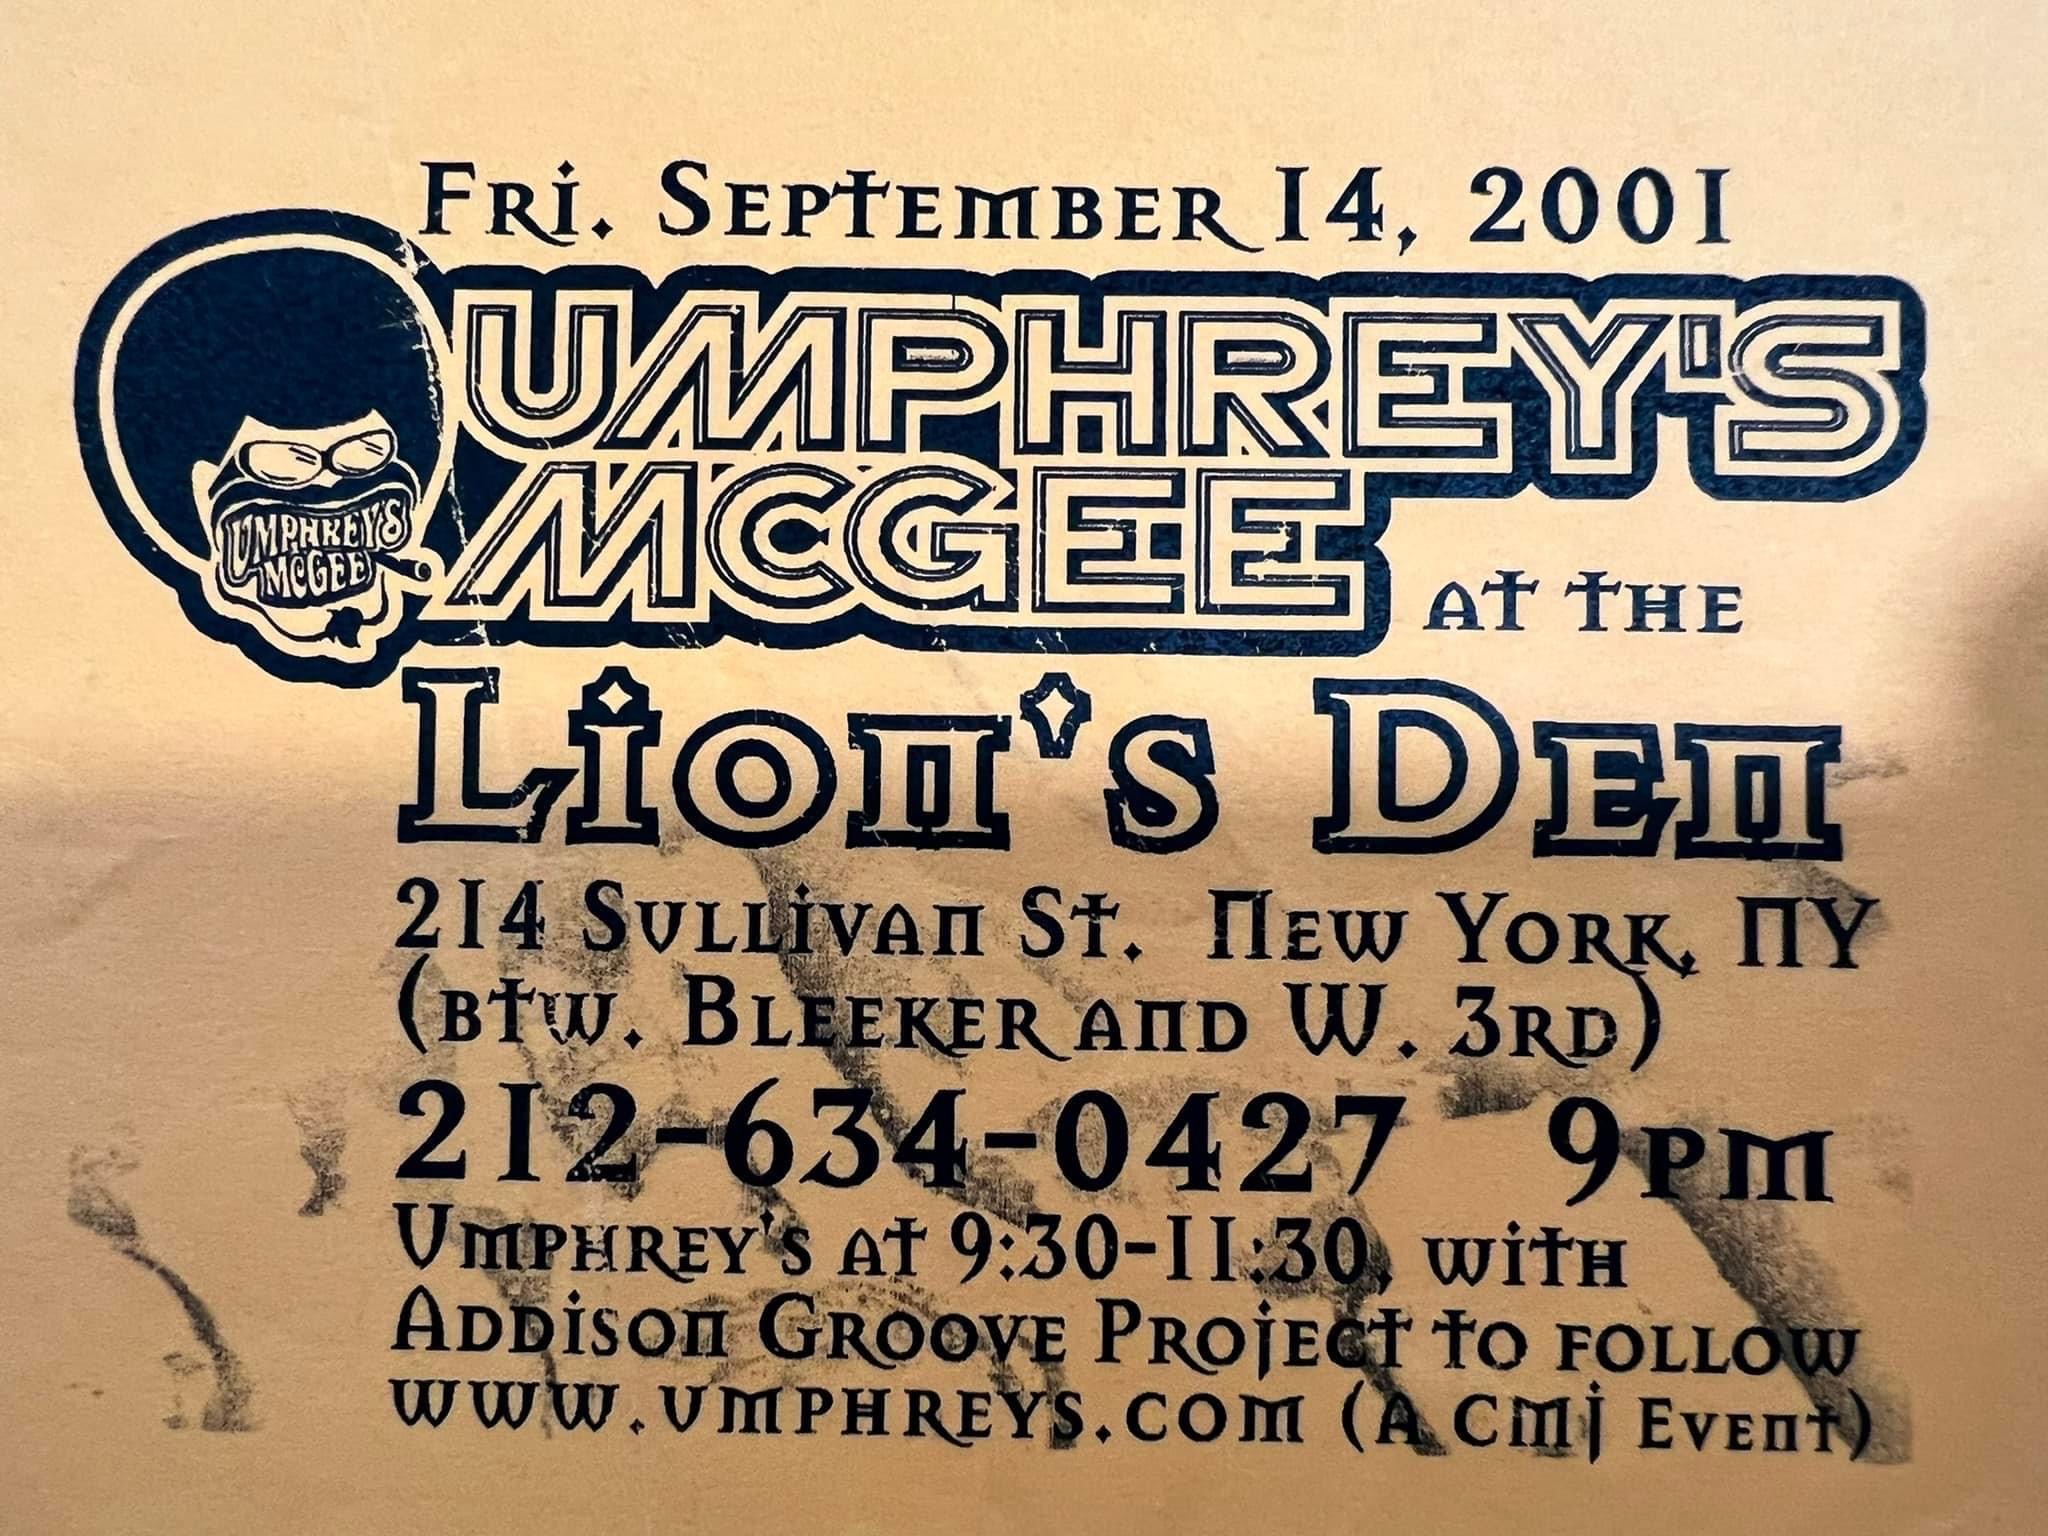 Umphrey's McGee